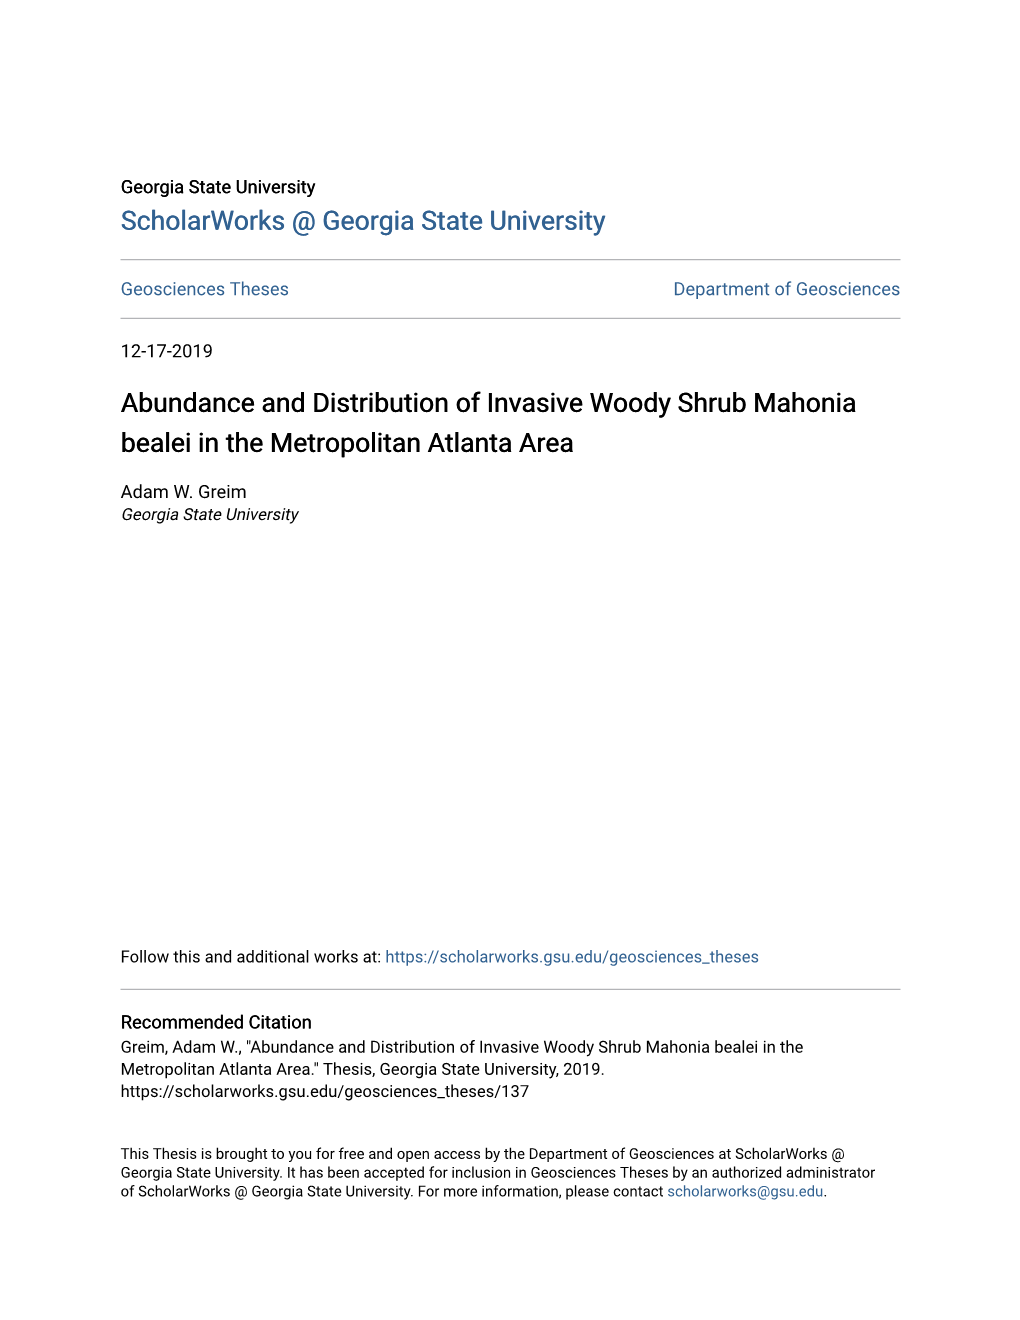 Abundance and Distribution of Invasive Woody Shrub Mahonia Bealei in the Metropolitan Atlanta Area